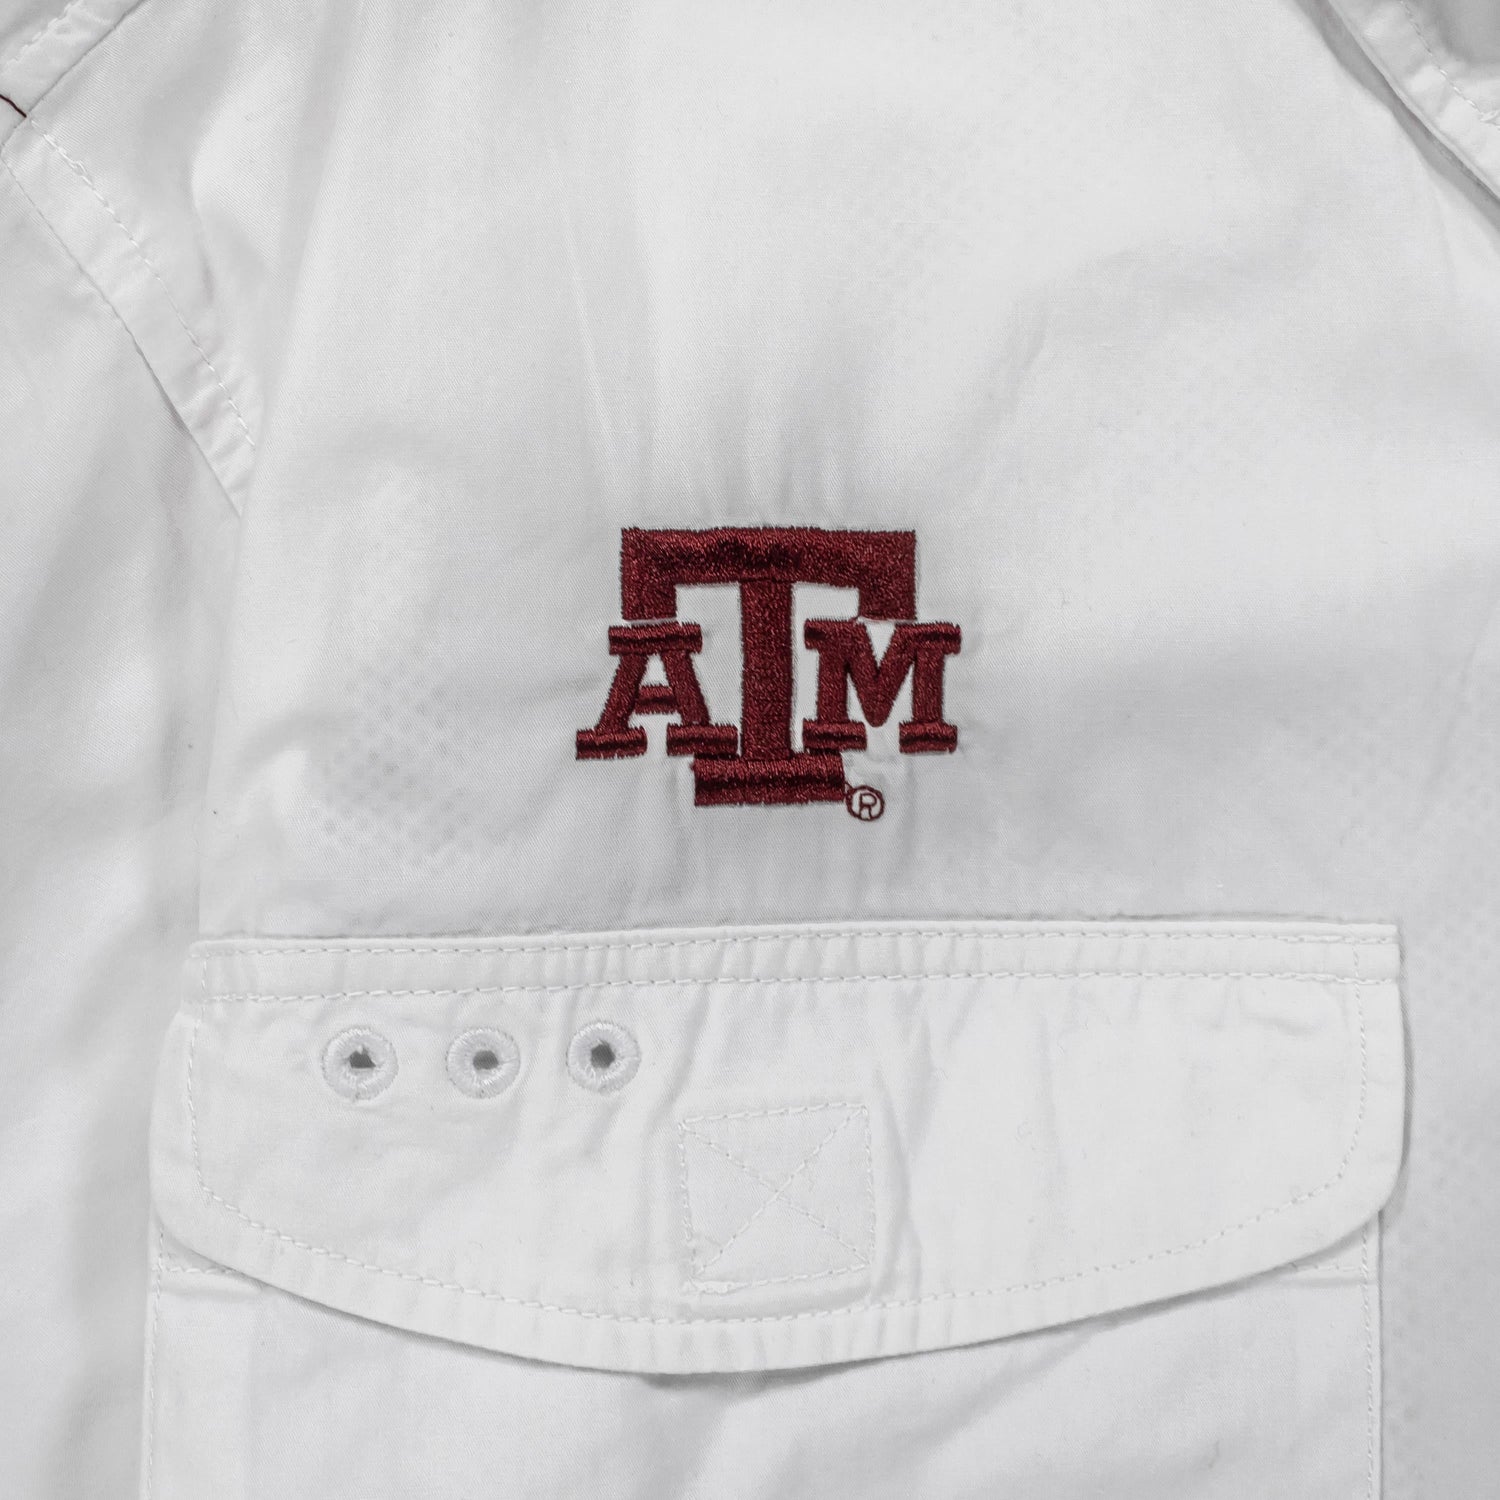 Texas A&M Men's Flag Fishing Button Down Shirt